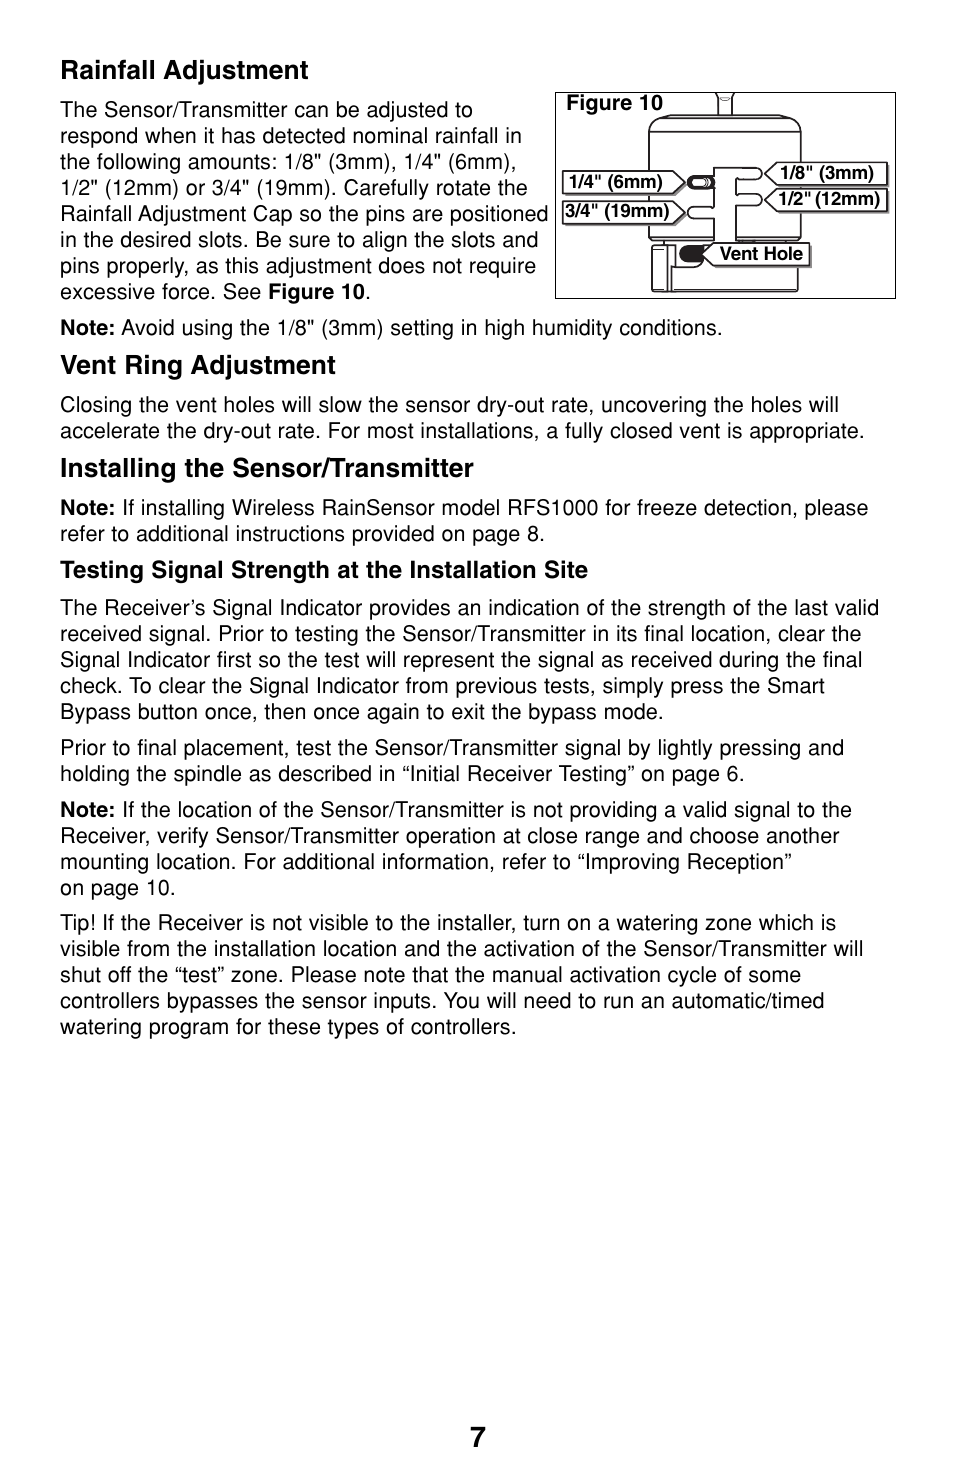 Rainfall adjustment, Vent ring adjustment, Installing the sensor/transmitter | Irritrol RainSensor User Manual | Page 7 / 12